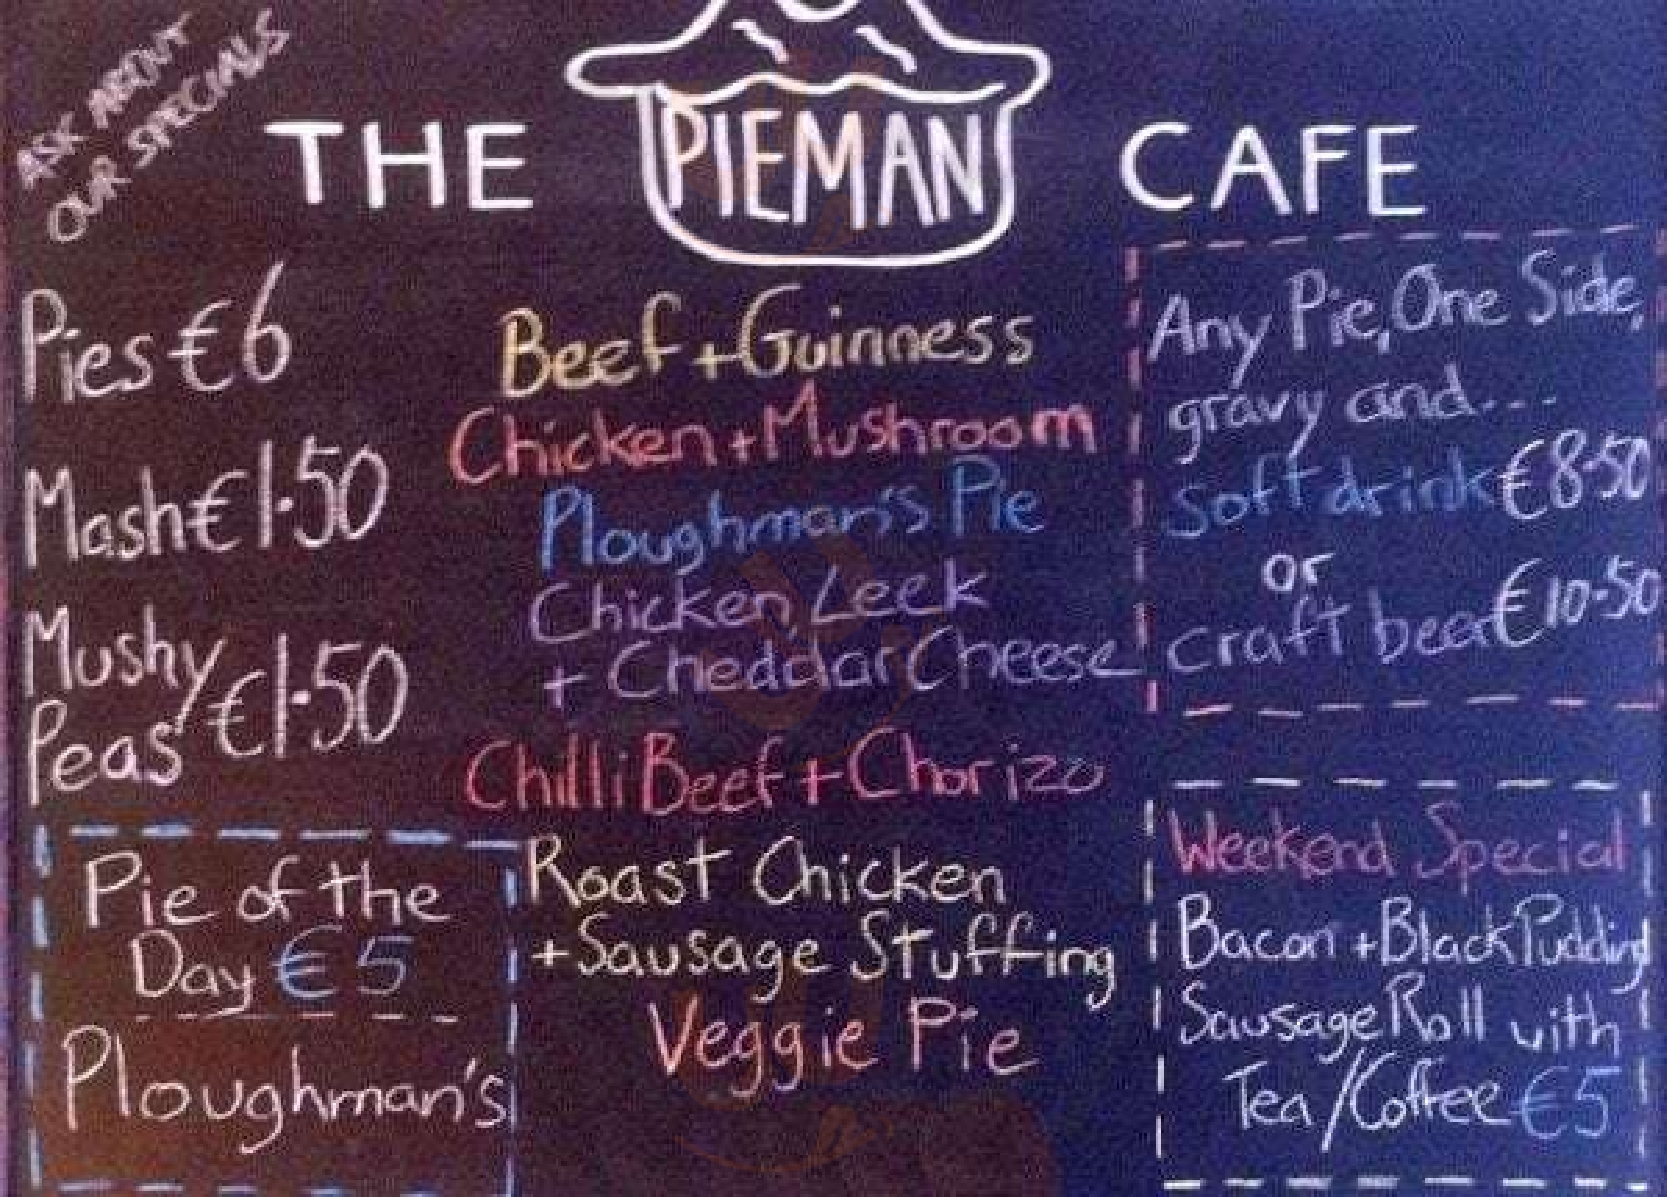 The Pieman Cafe Dublin Menu - 1